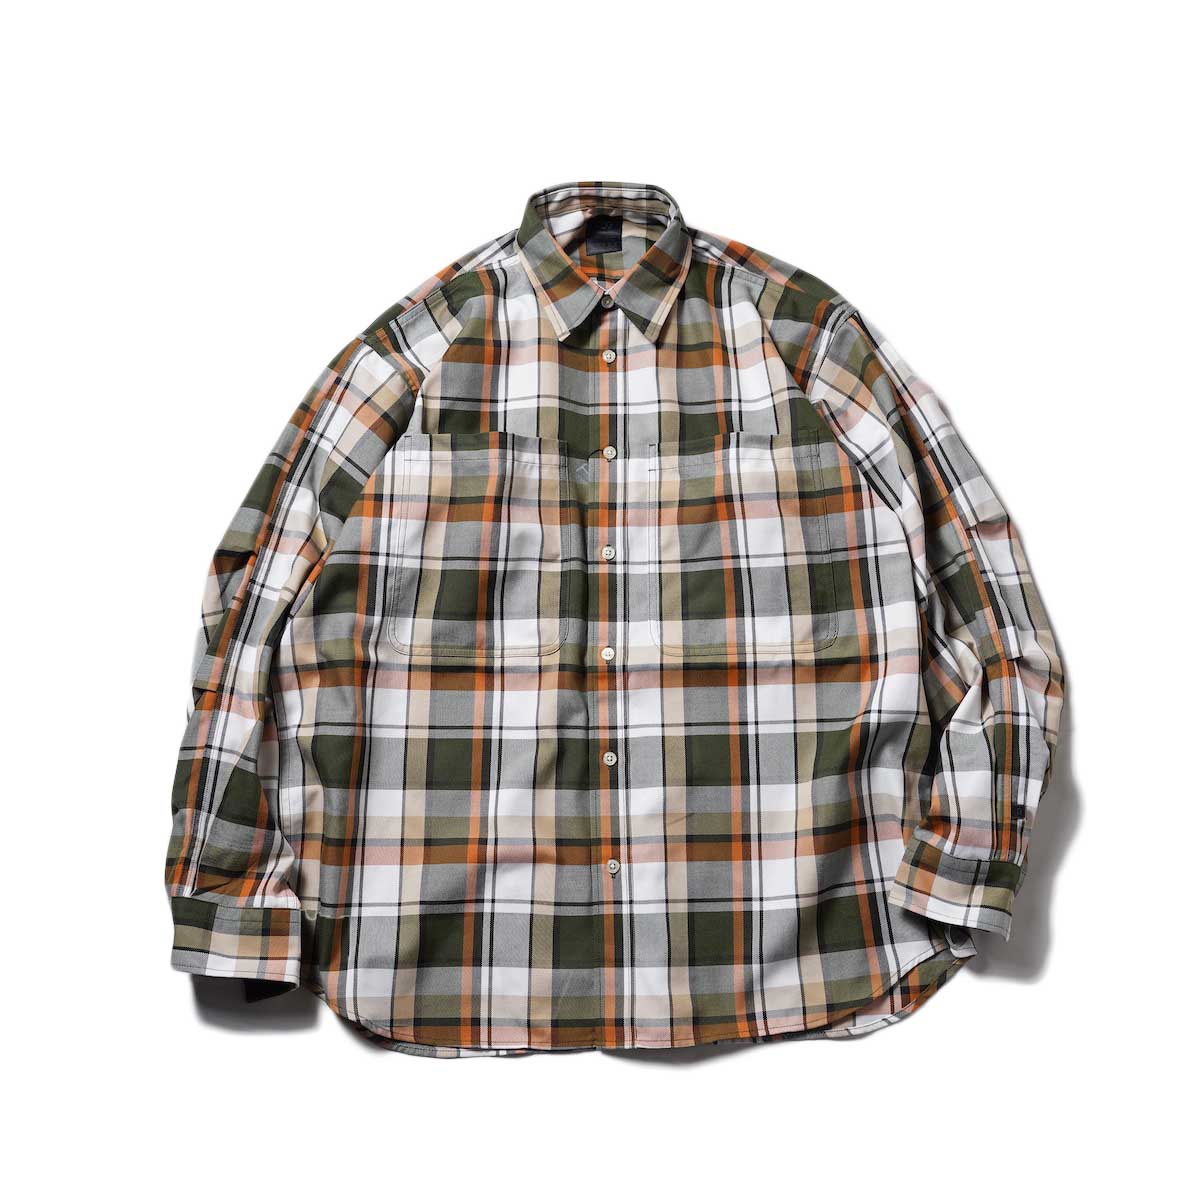 DAIWA PIER39 / Tech Work Shirts Flannel Plaids (Olive)